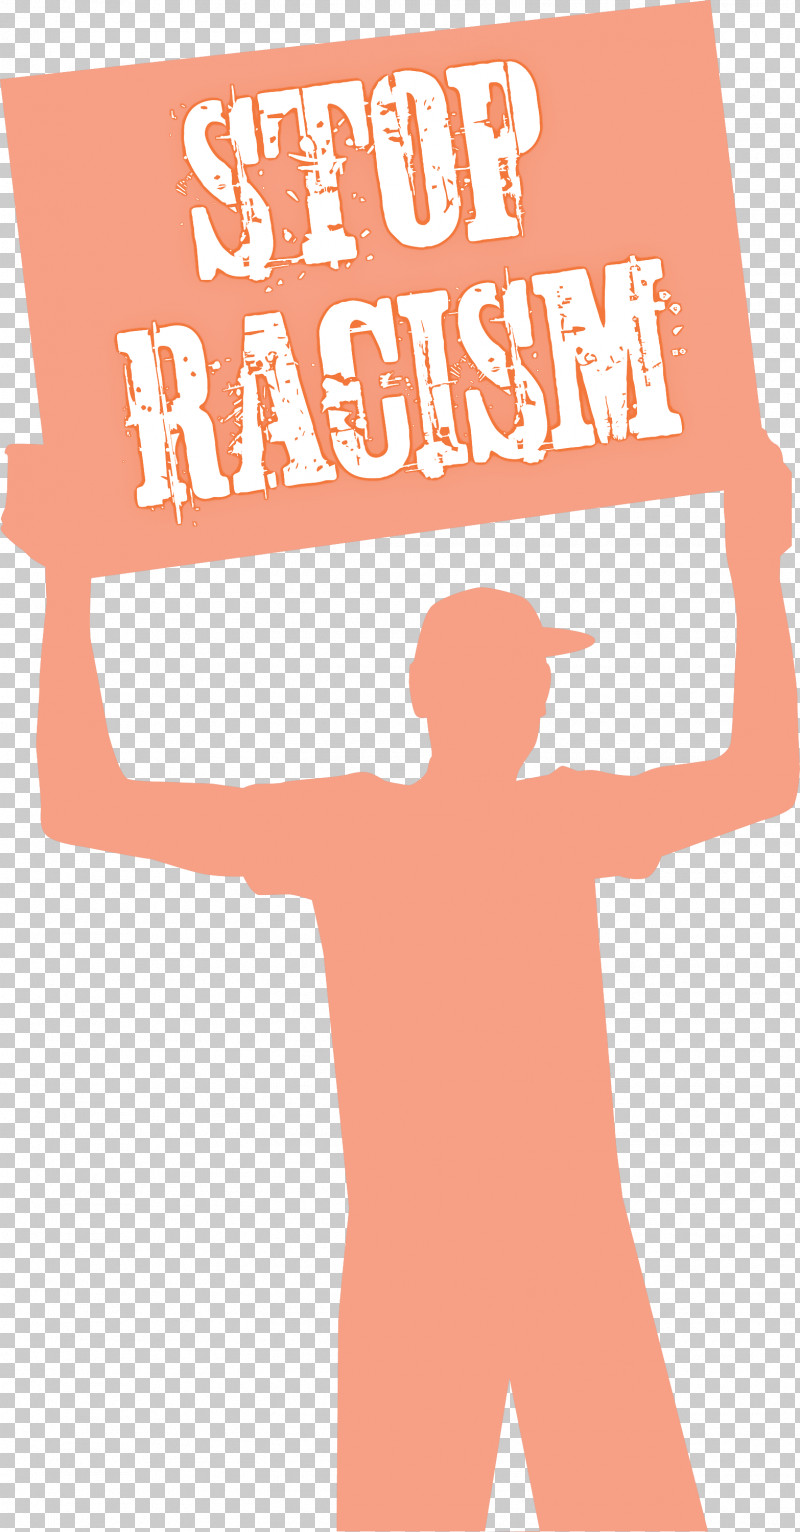 STOP RACISM PNG, Clipart, Area, Behavior, Human, Human Skeleton, Logo Free PNG Download